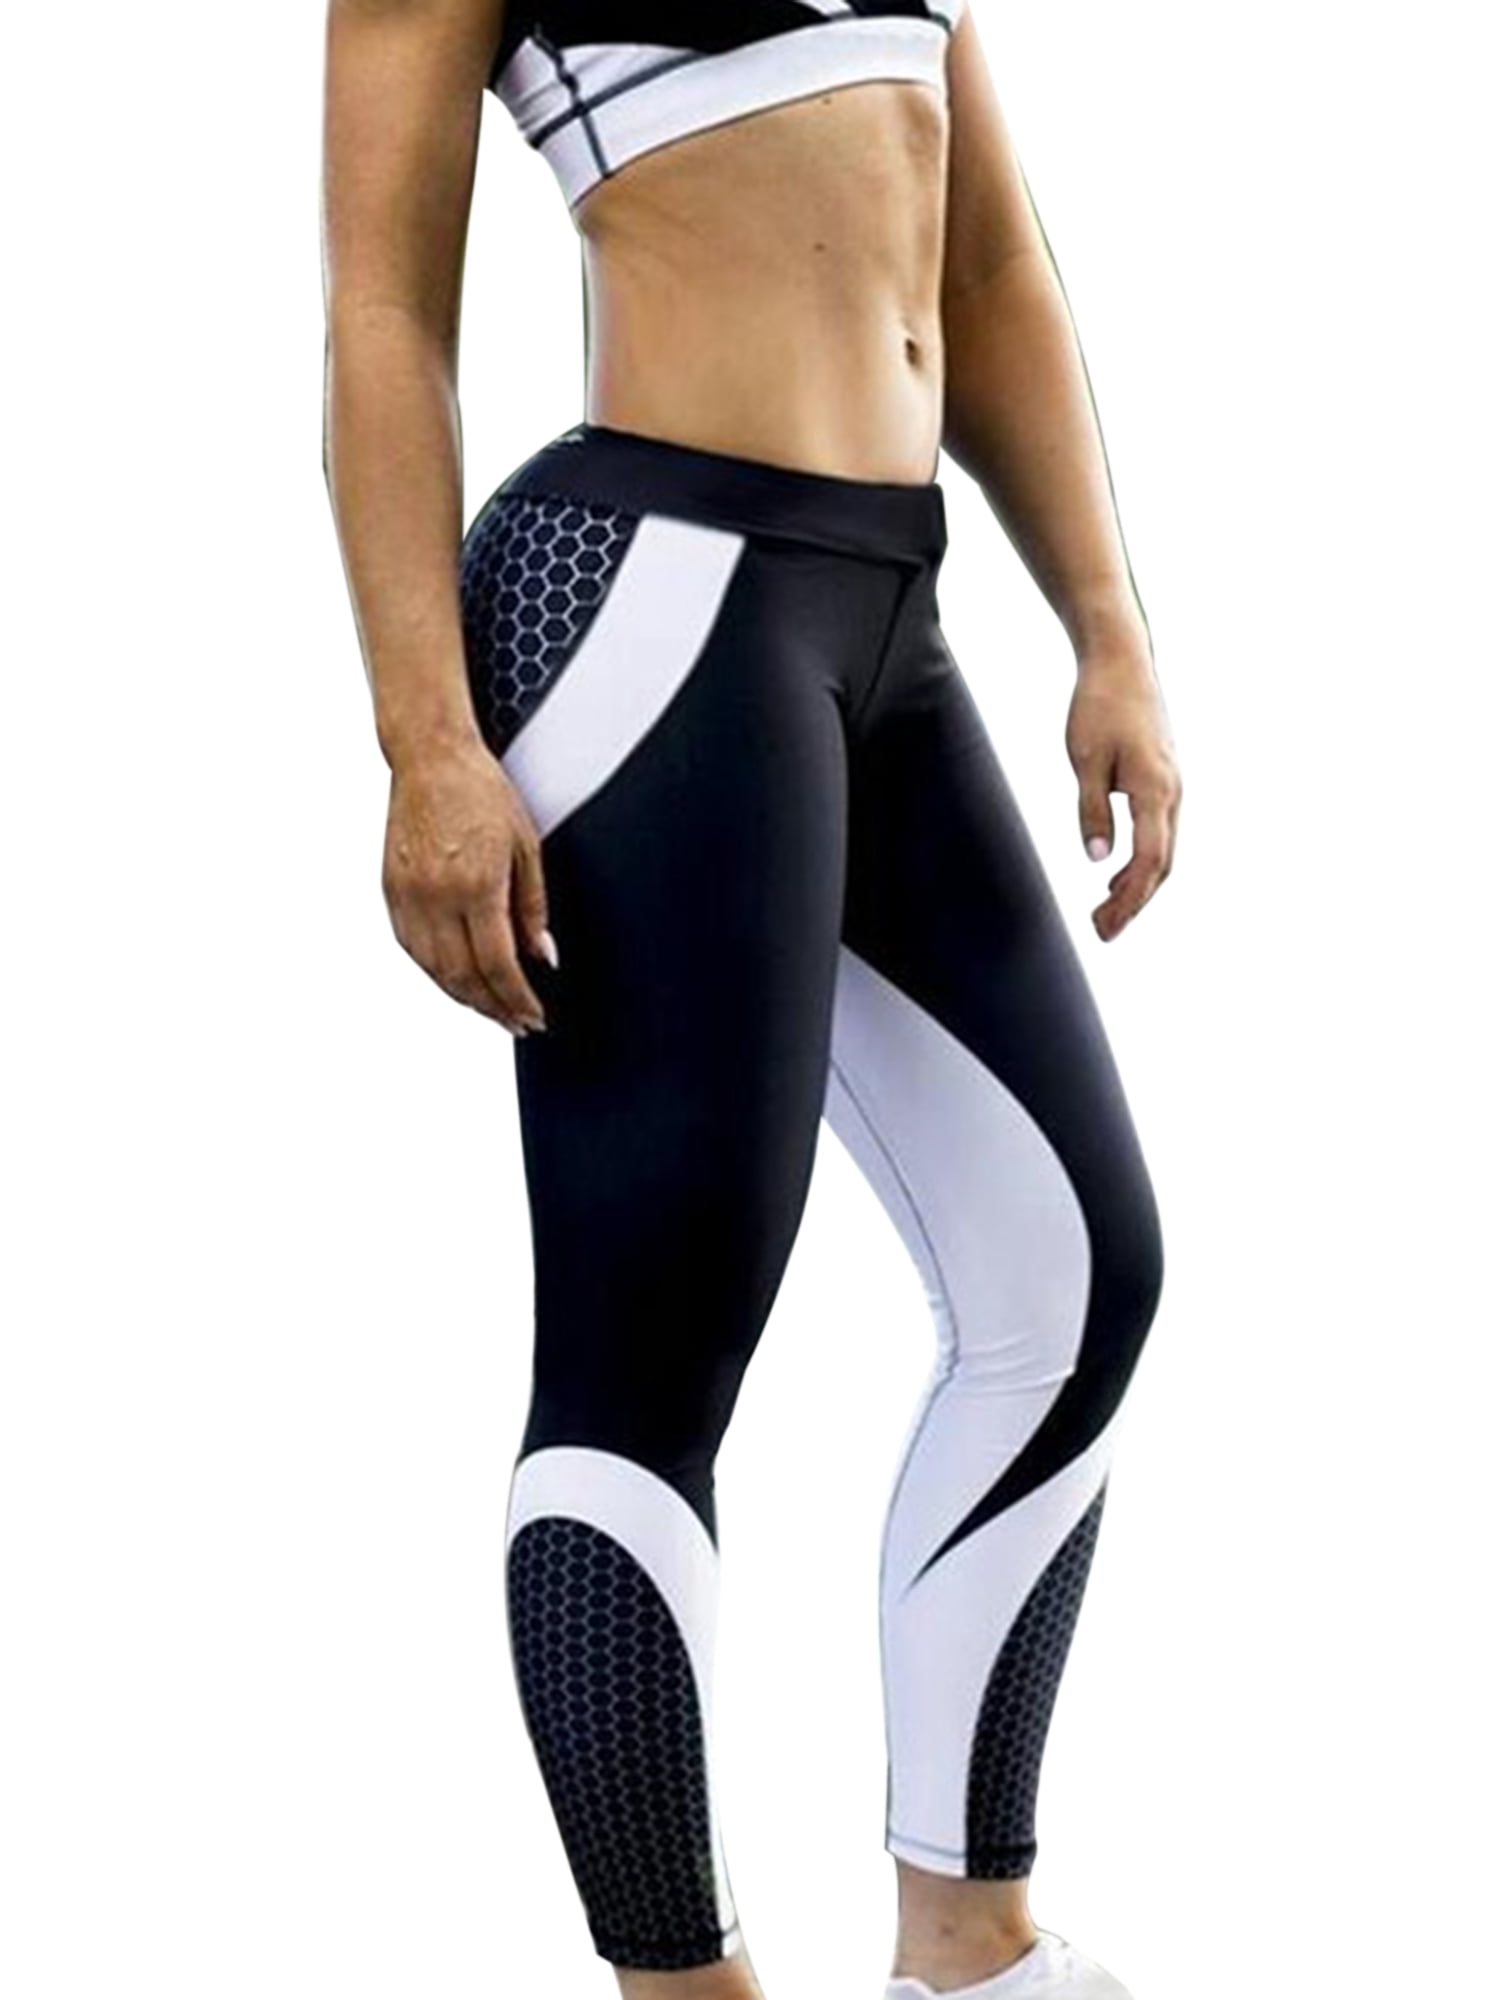 Details about   3D Print Women High Waisted Activewear Leggings Fitness Sport Running Yoga Pants